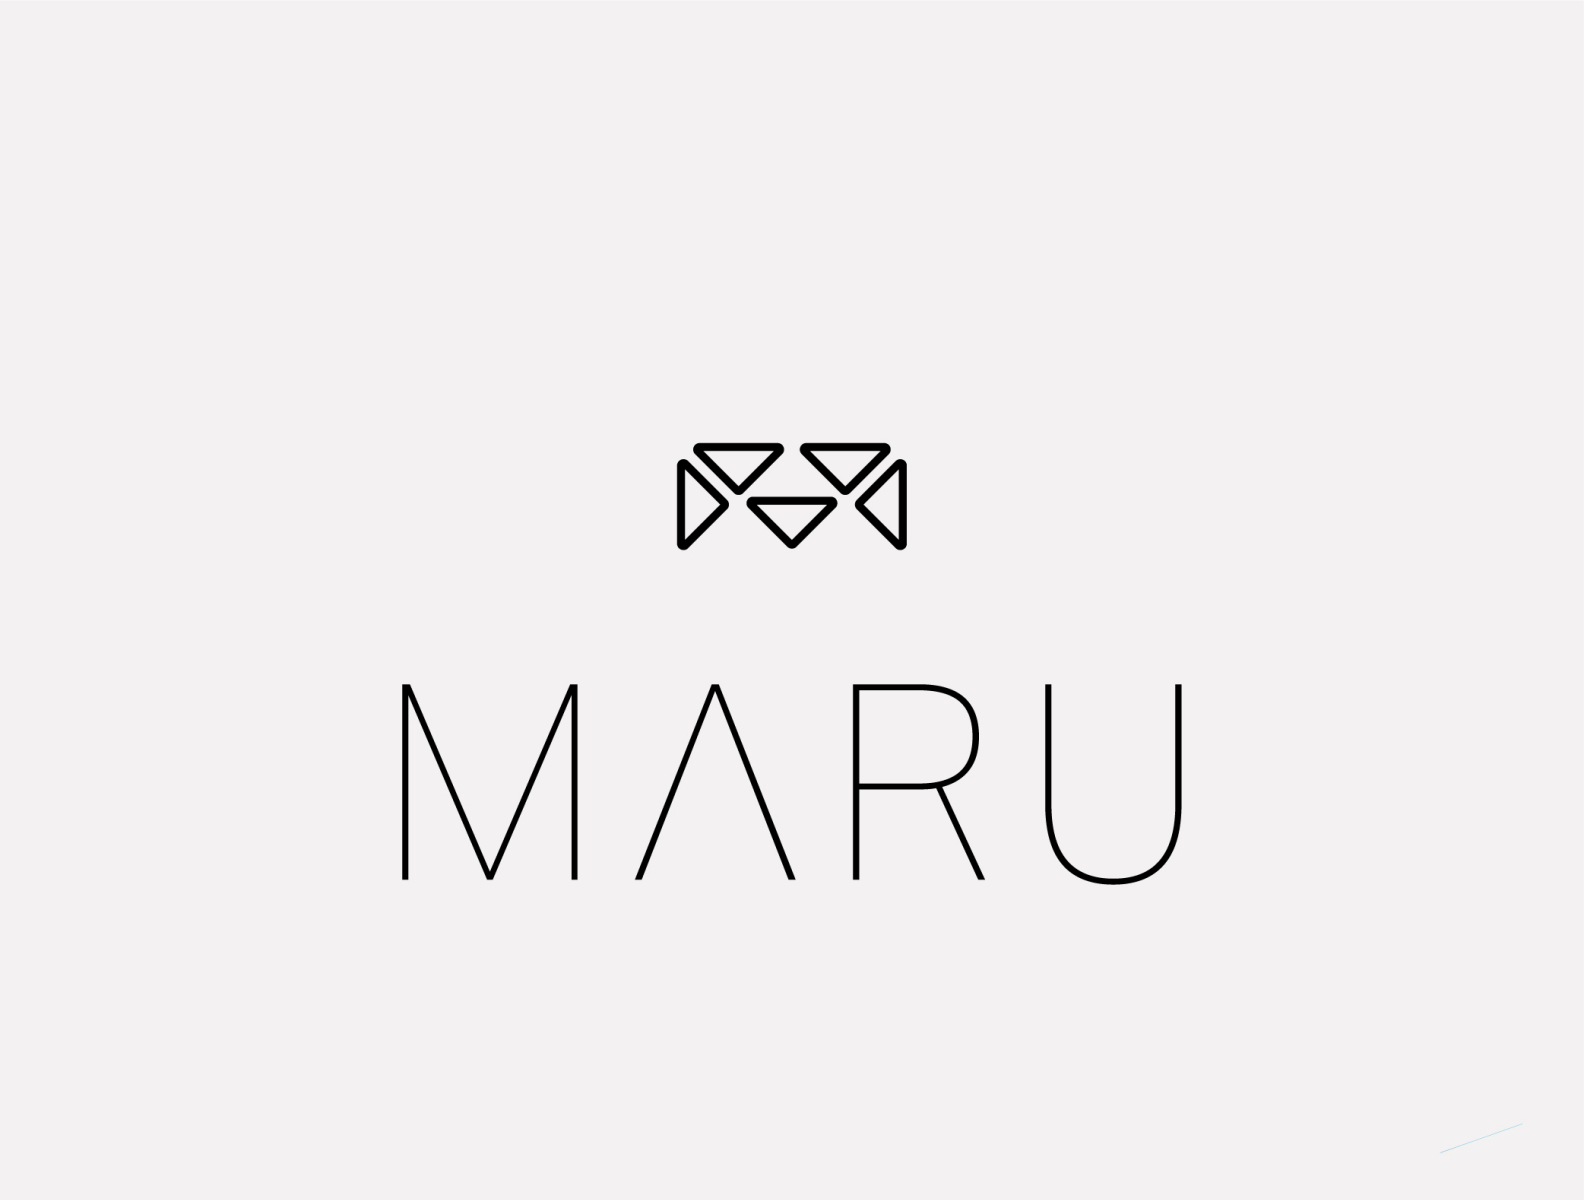 MARU 01 by Erick Murashko on Dribbble